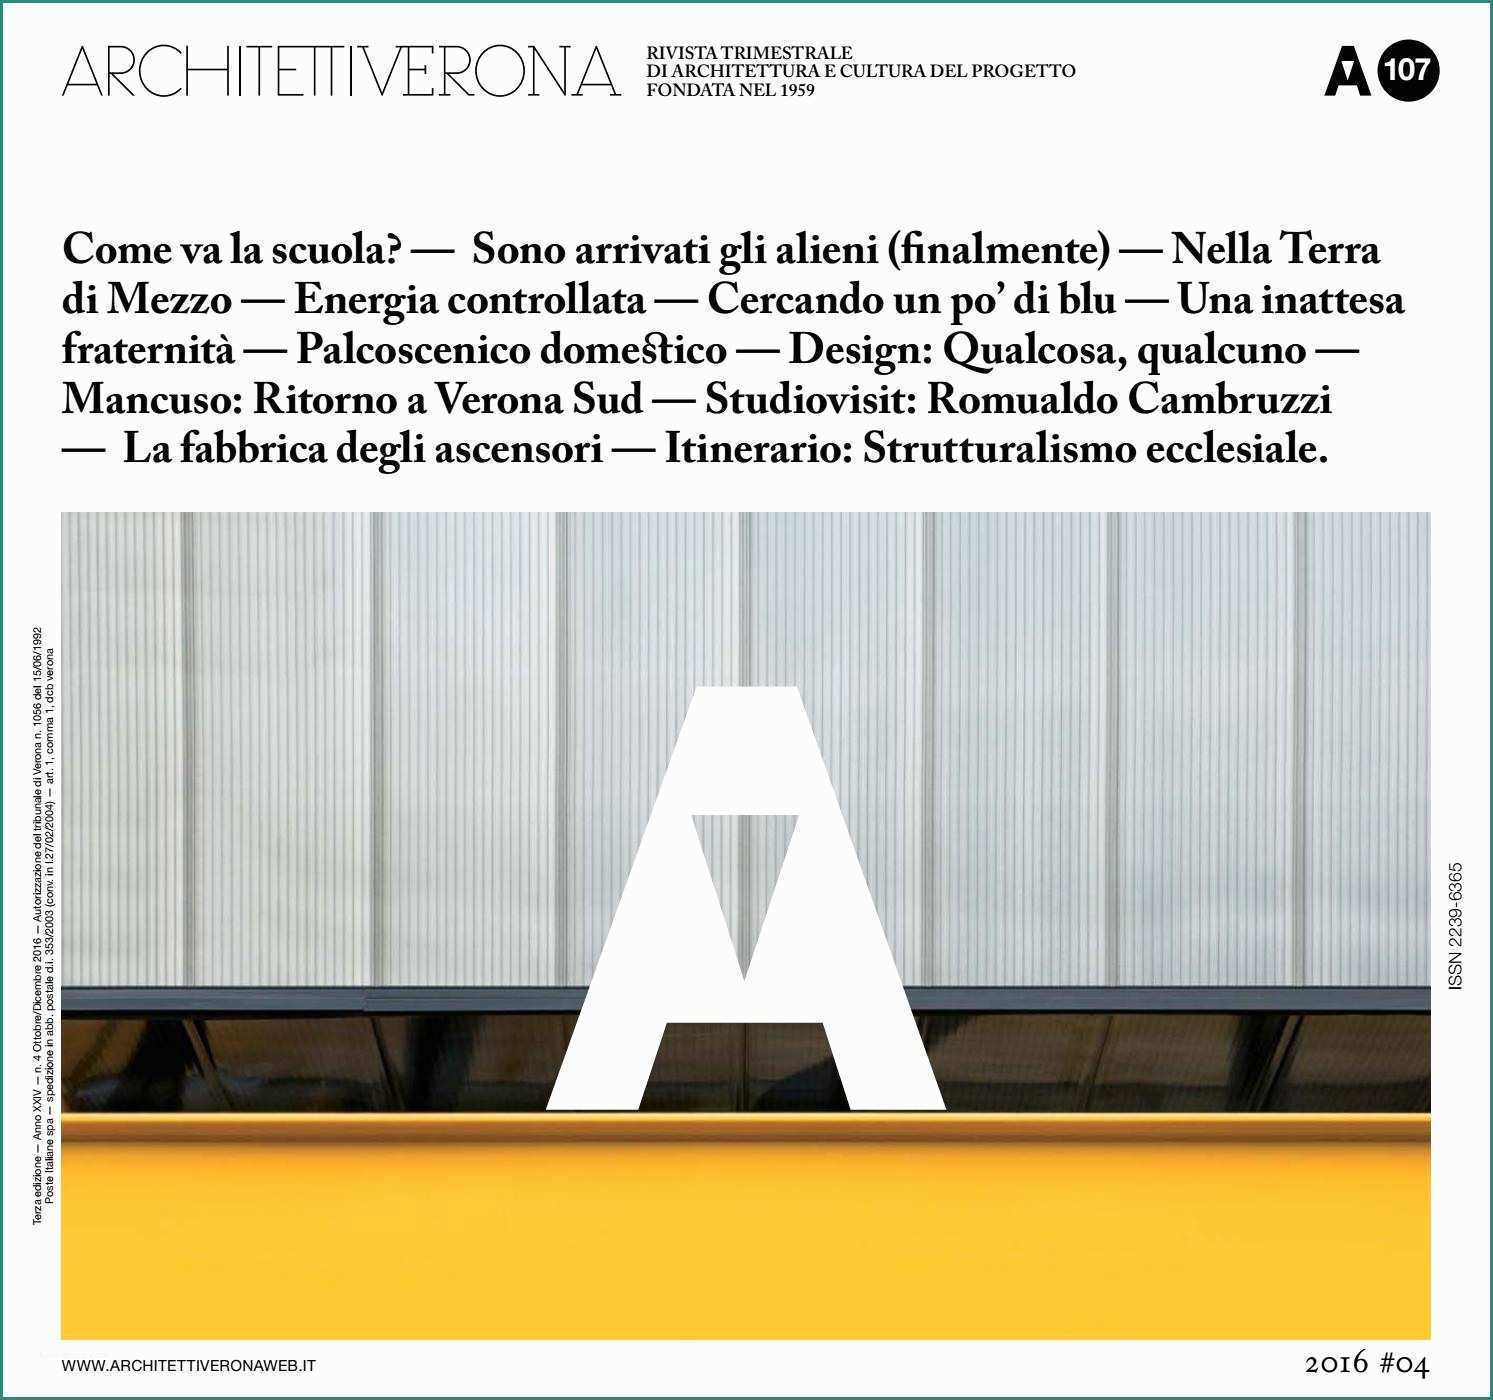 Servoscala Dimensioni Minime E Architettiverona 107 by Architettiverona issuu